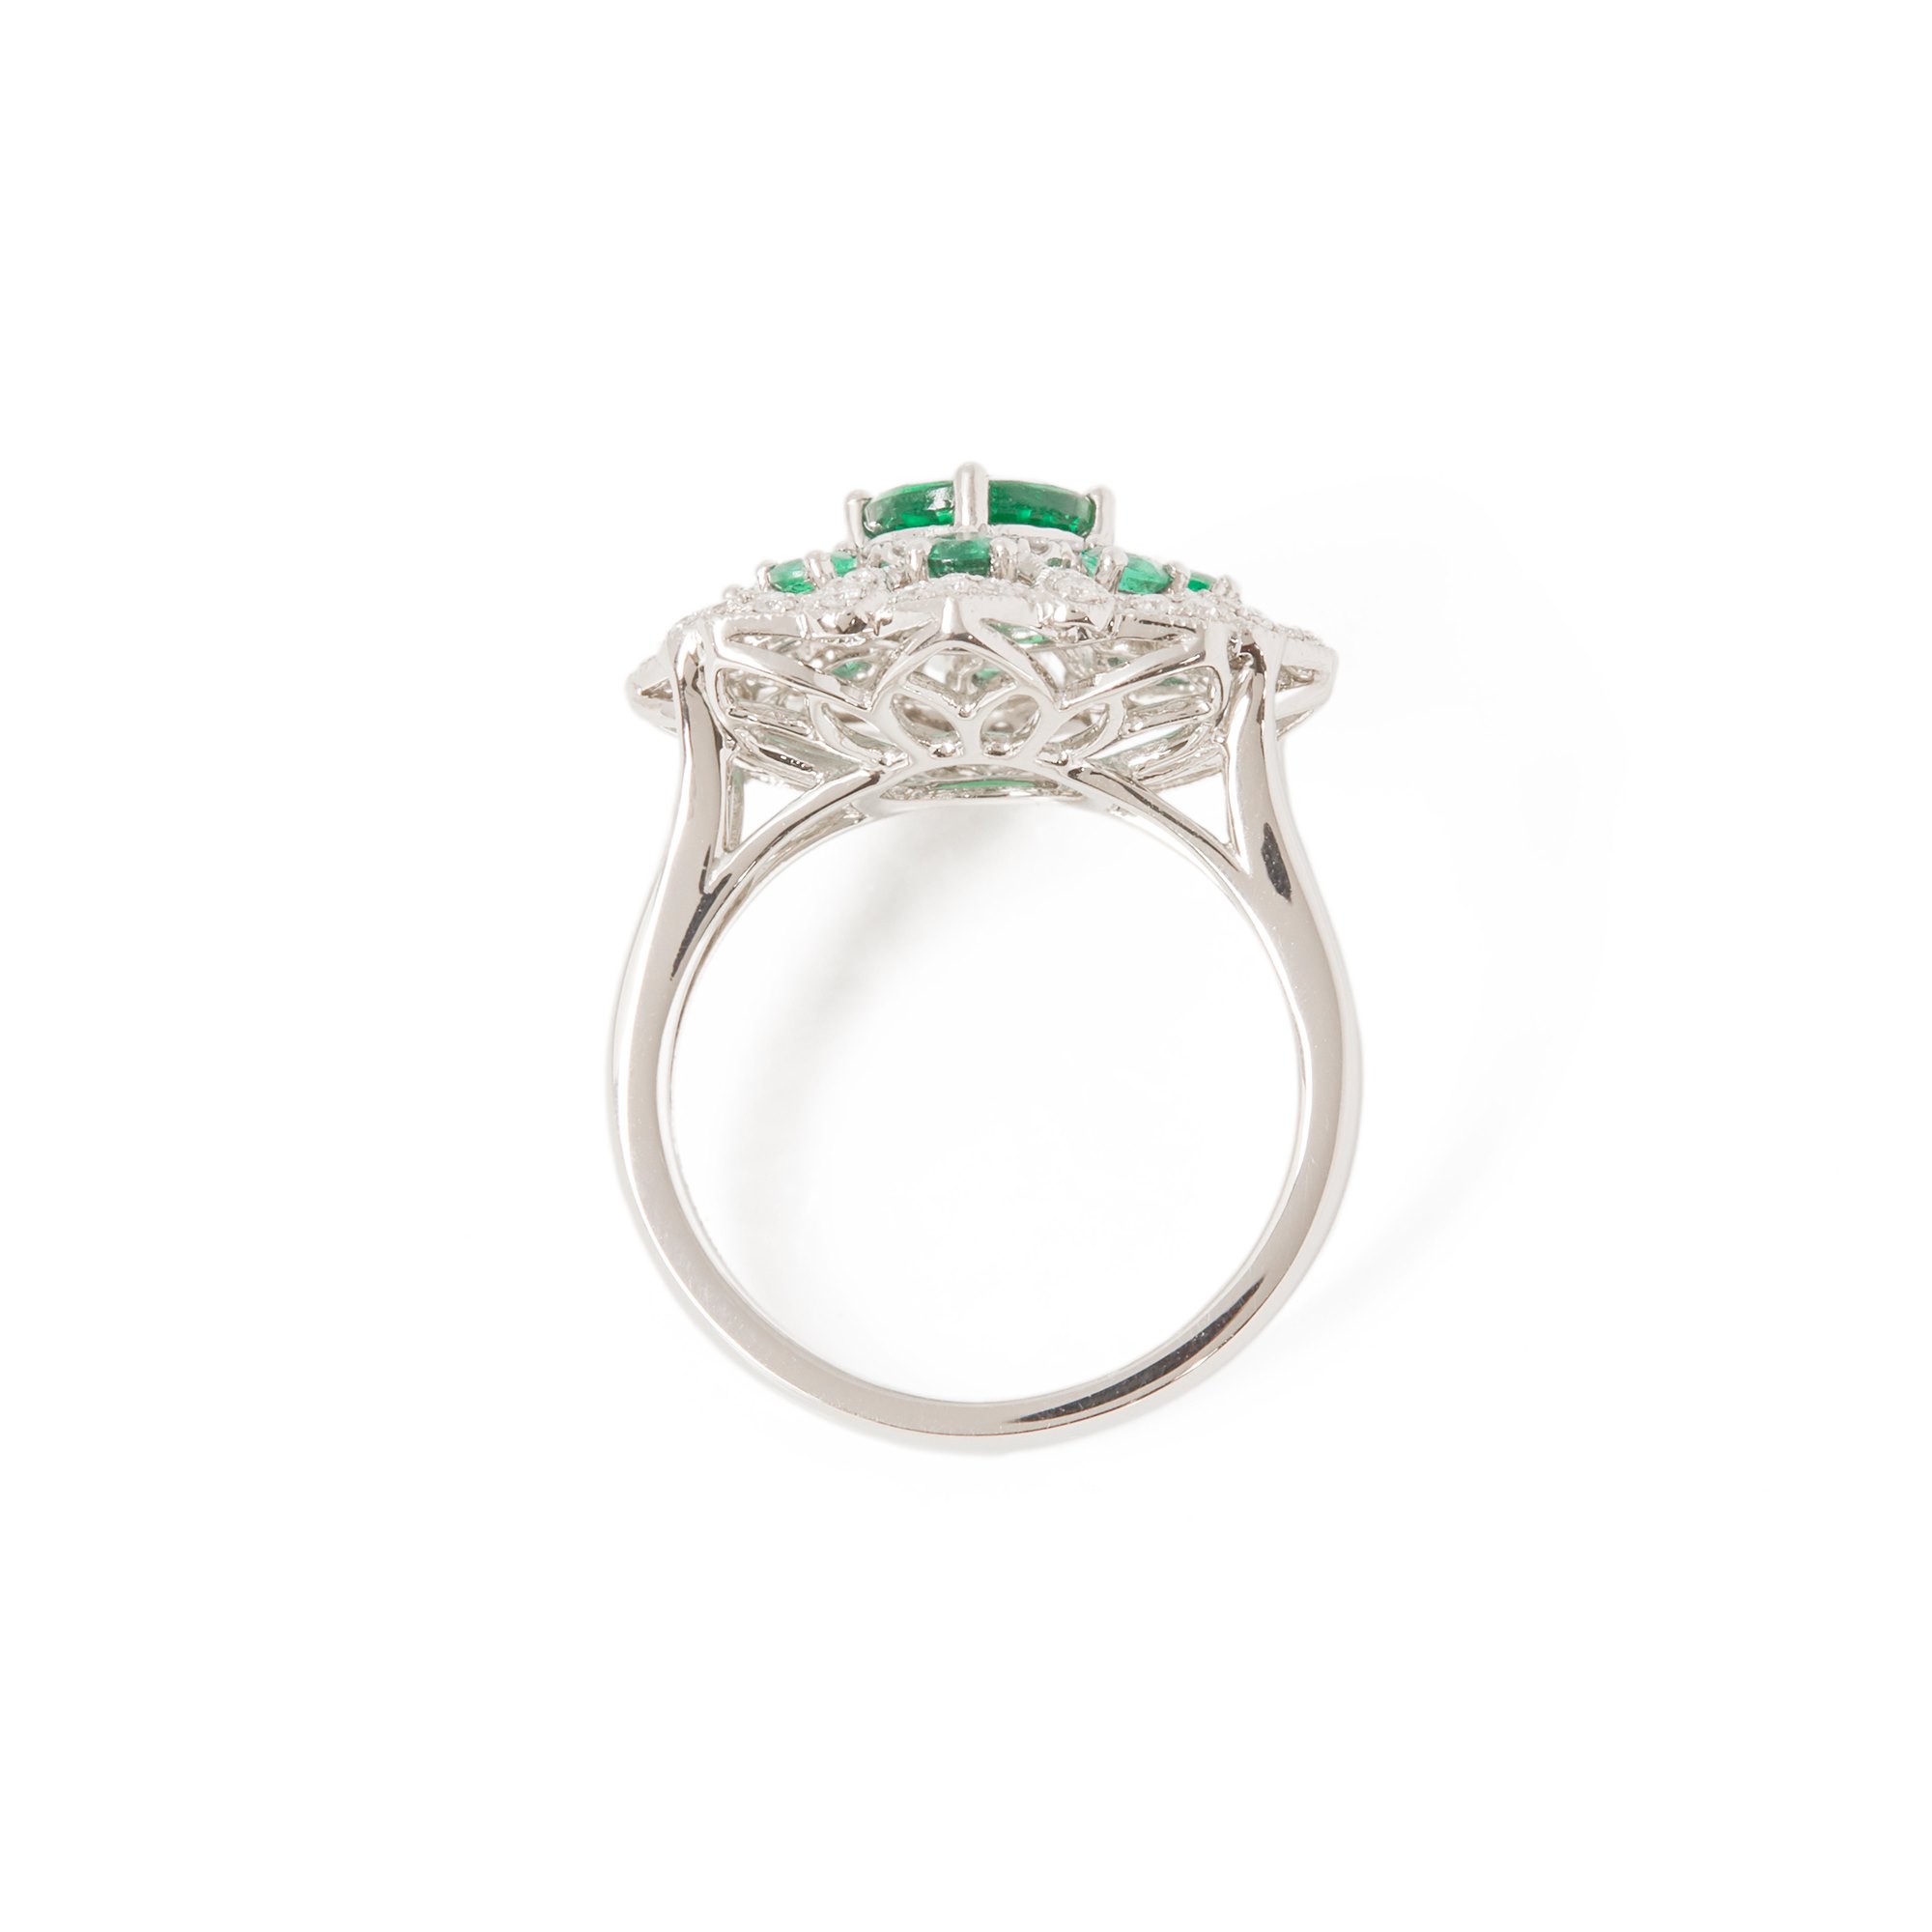 David Jerome Certified 1.32ct Round Cut Emerald and Diamond Platinum Ring